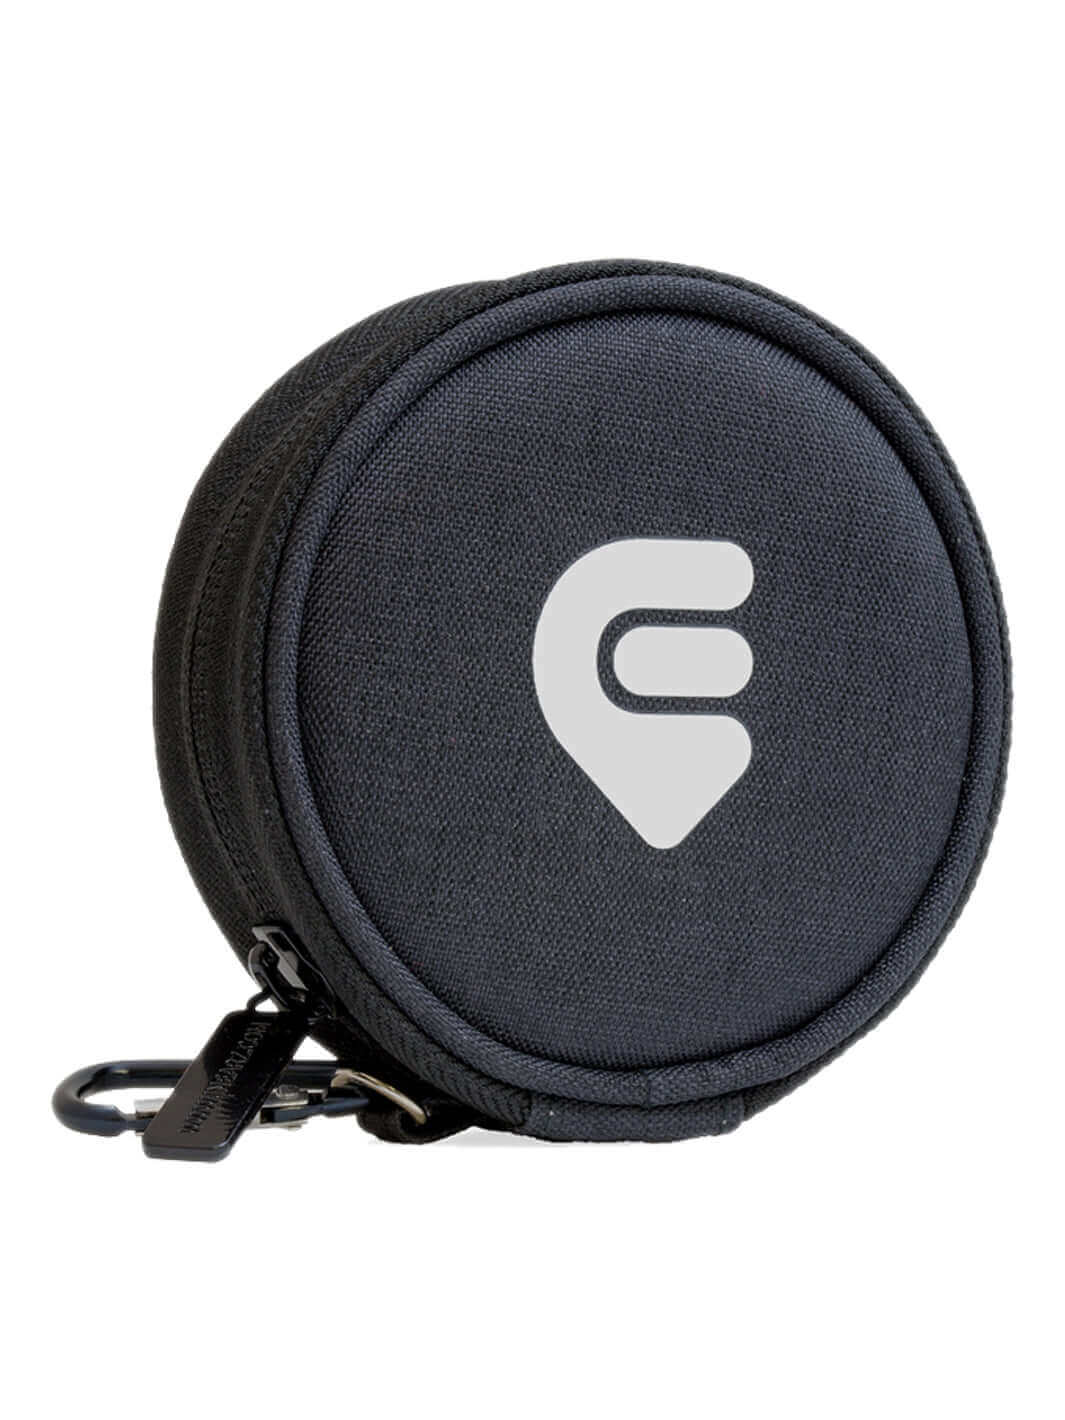 Small Round Zipper Case | InEarz Audio